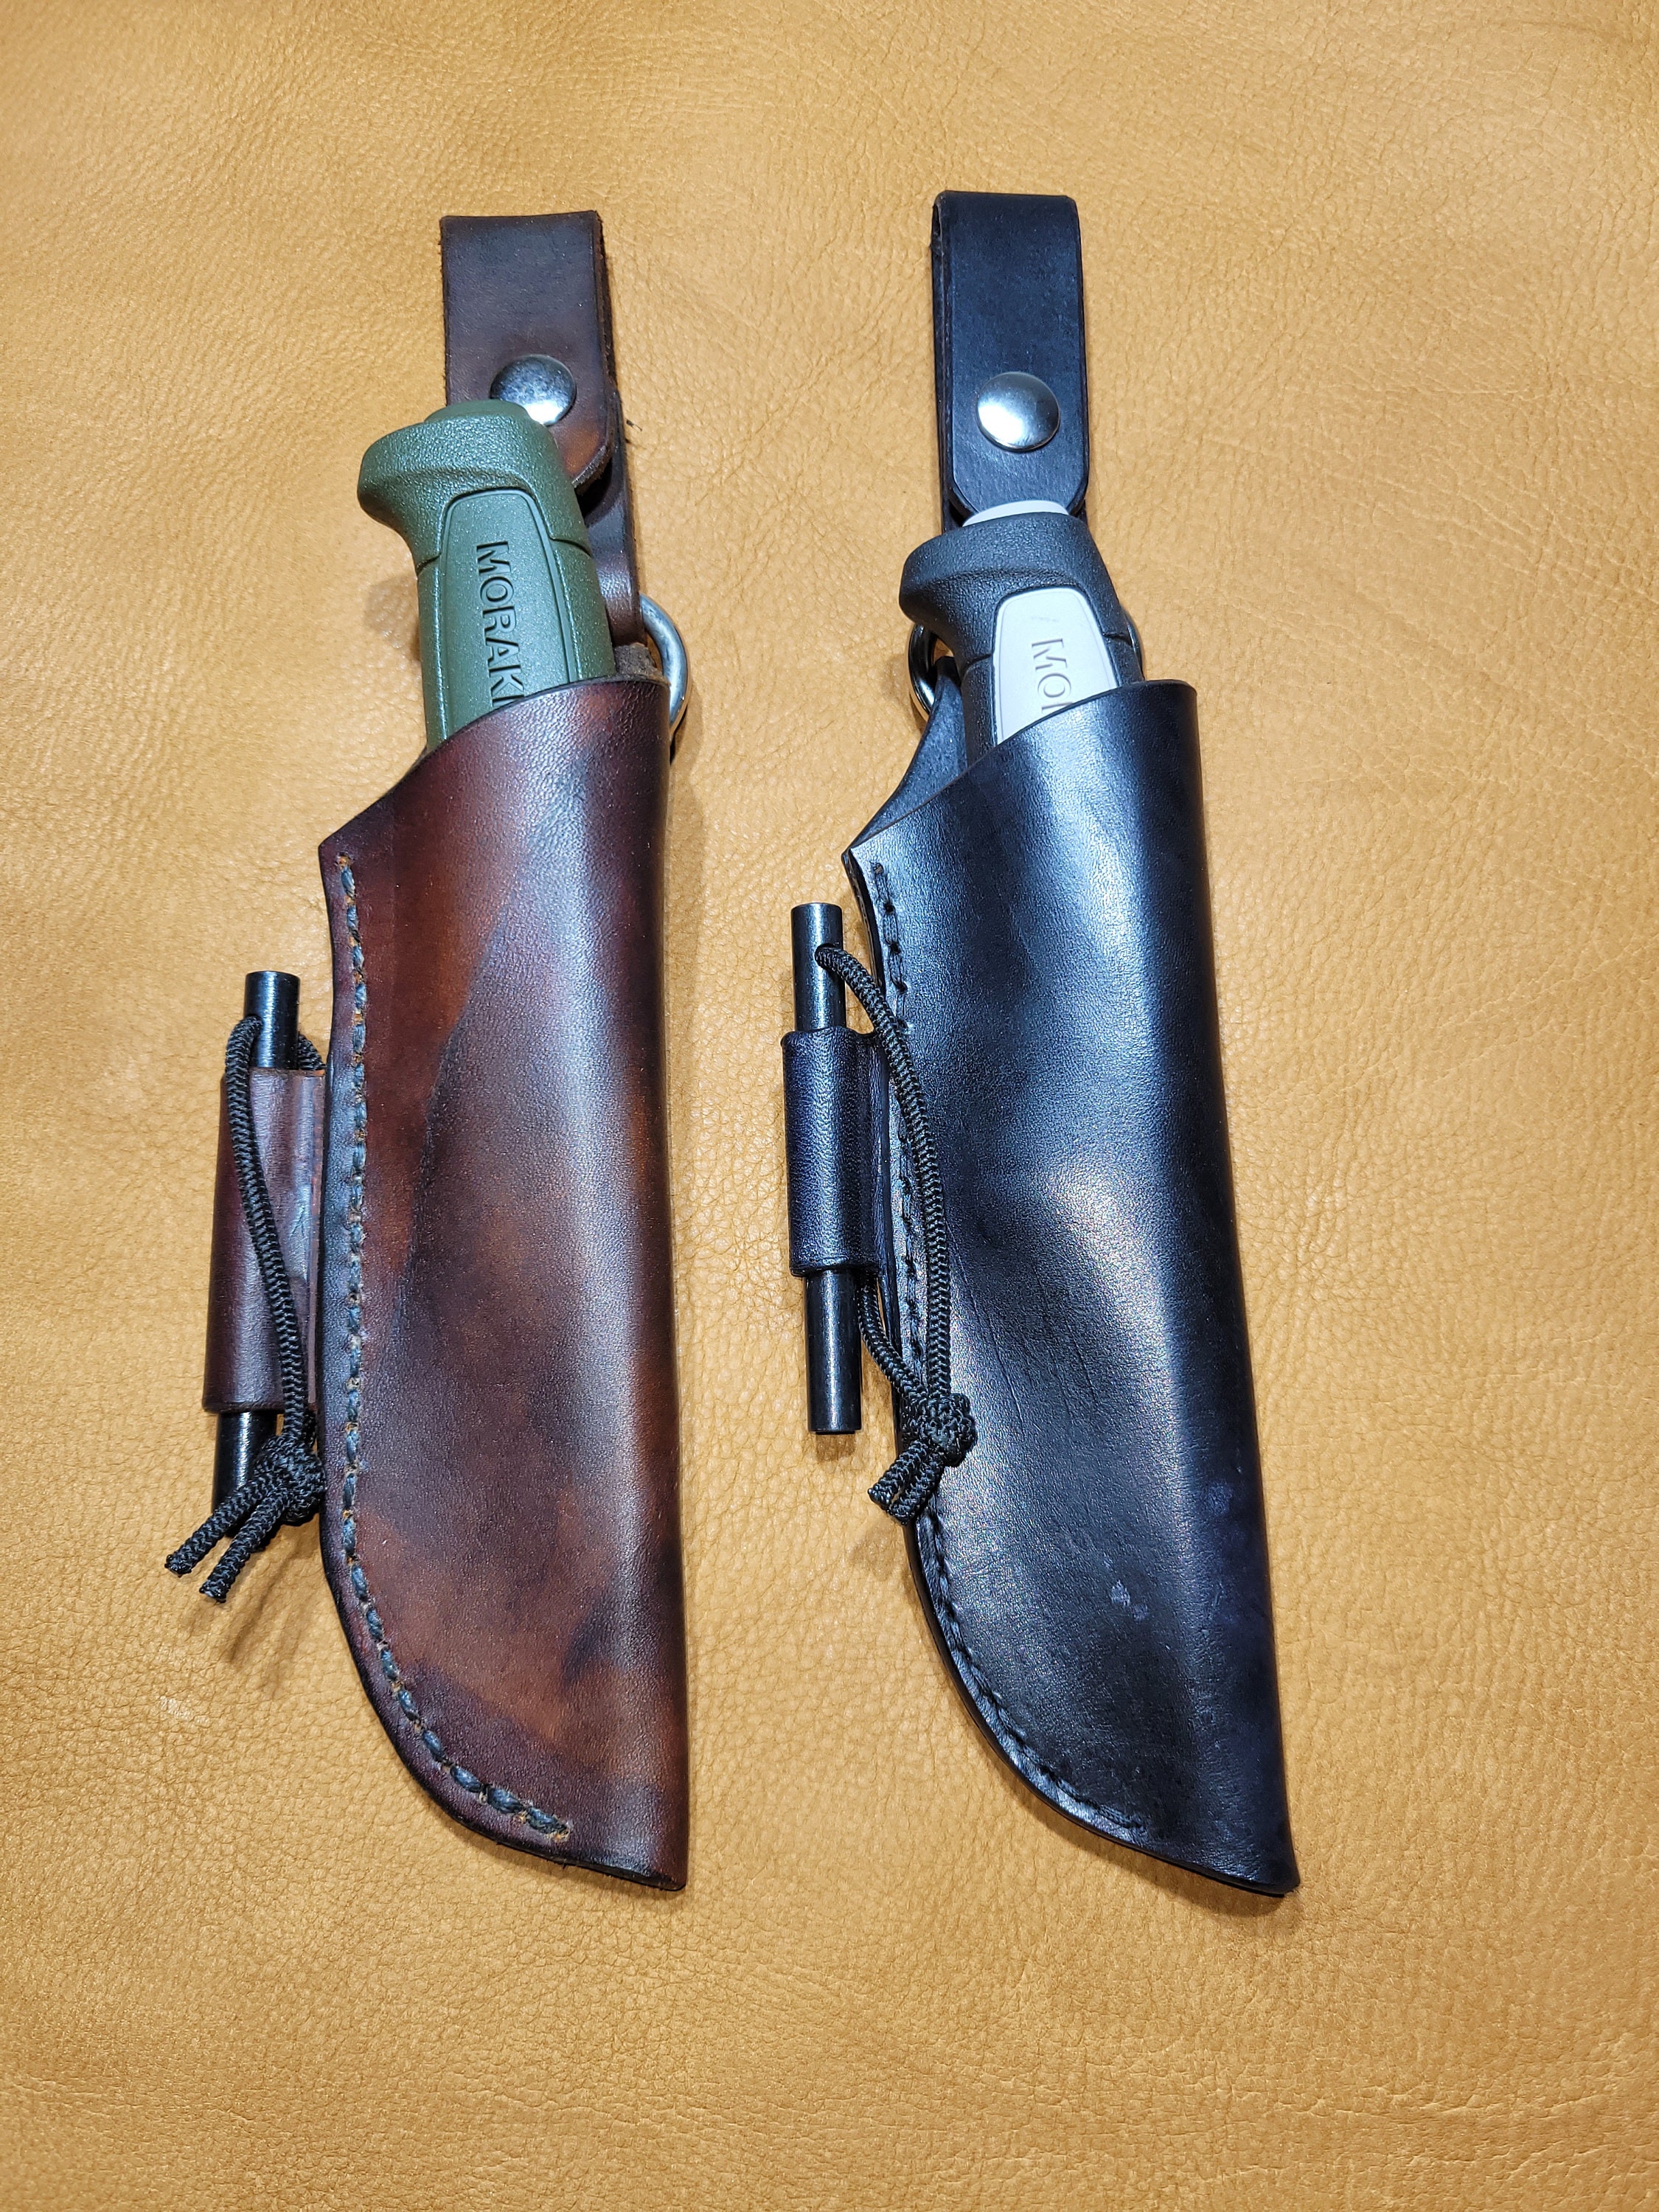 ELW Full Grain Leather Mora Knife Sheath with Belt Loop - Protect